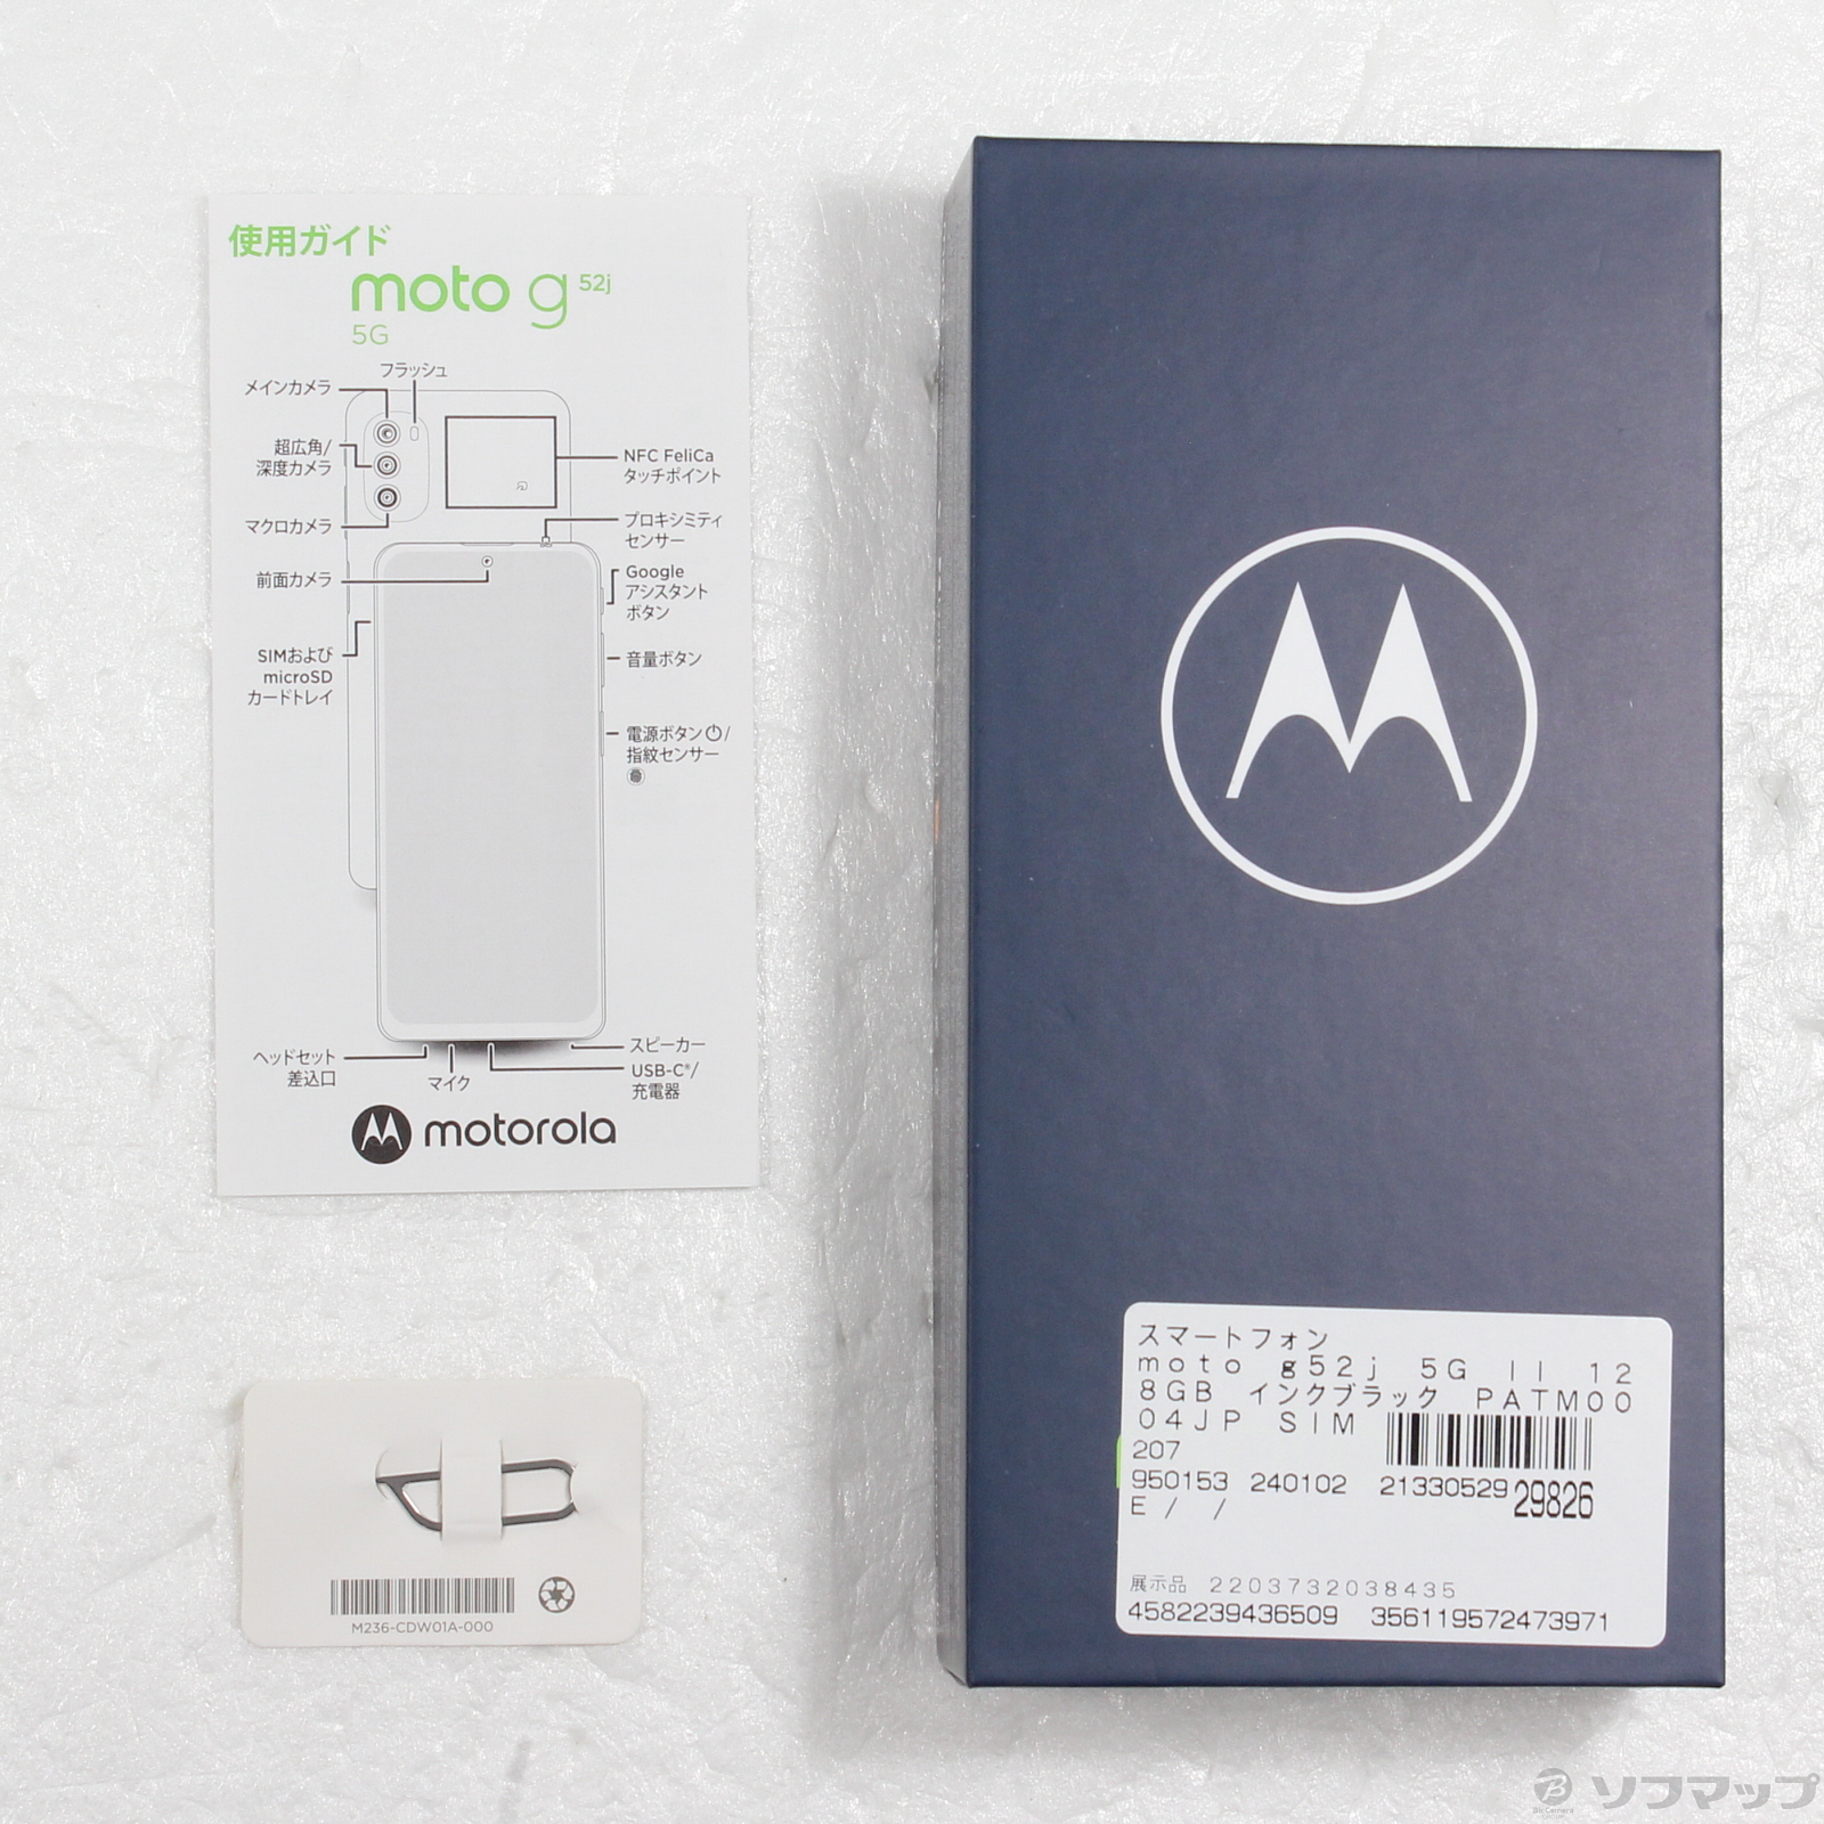 Motorola moto g52j 5G II moto g52j 5G ガラスフィルム 強化ガラス フィルム モトローラ モト g52j5g g52 液晶保護 画面保護 SIMフリー カバー AGC日本製ガラス